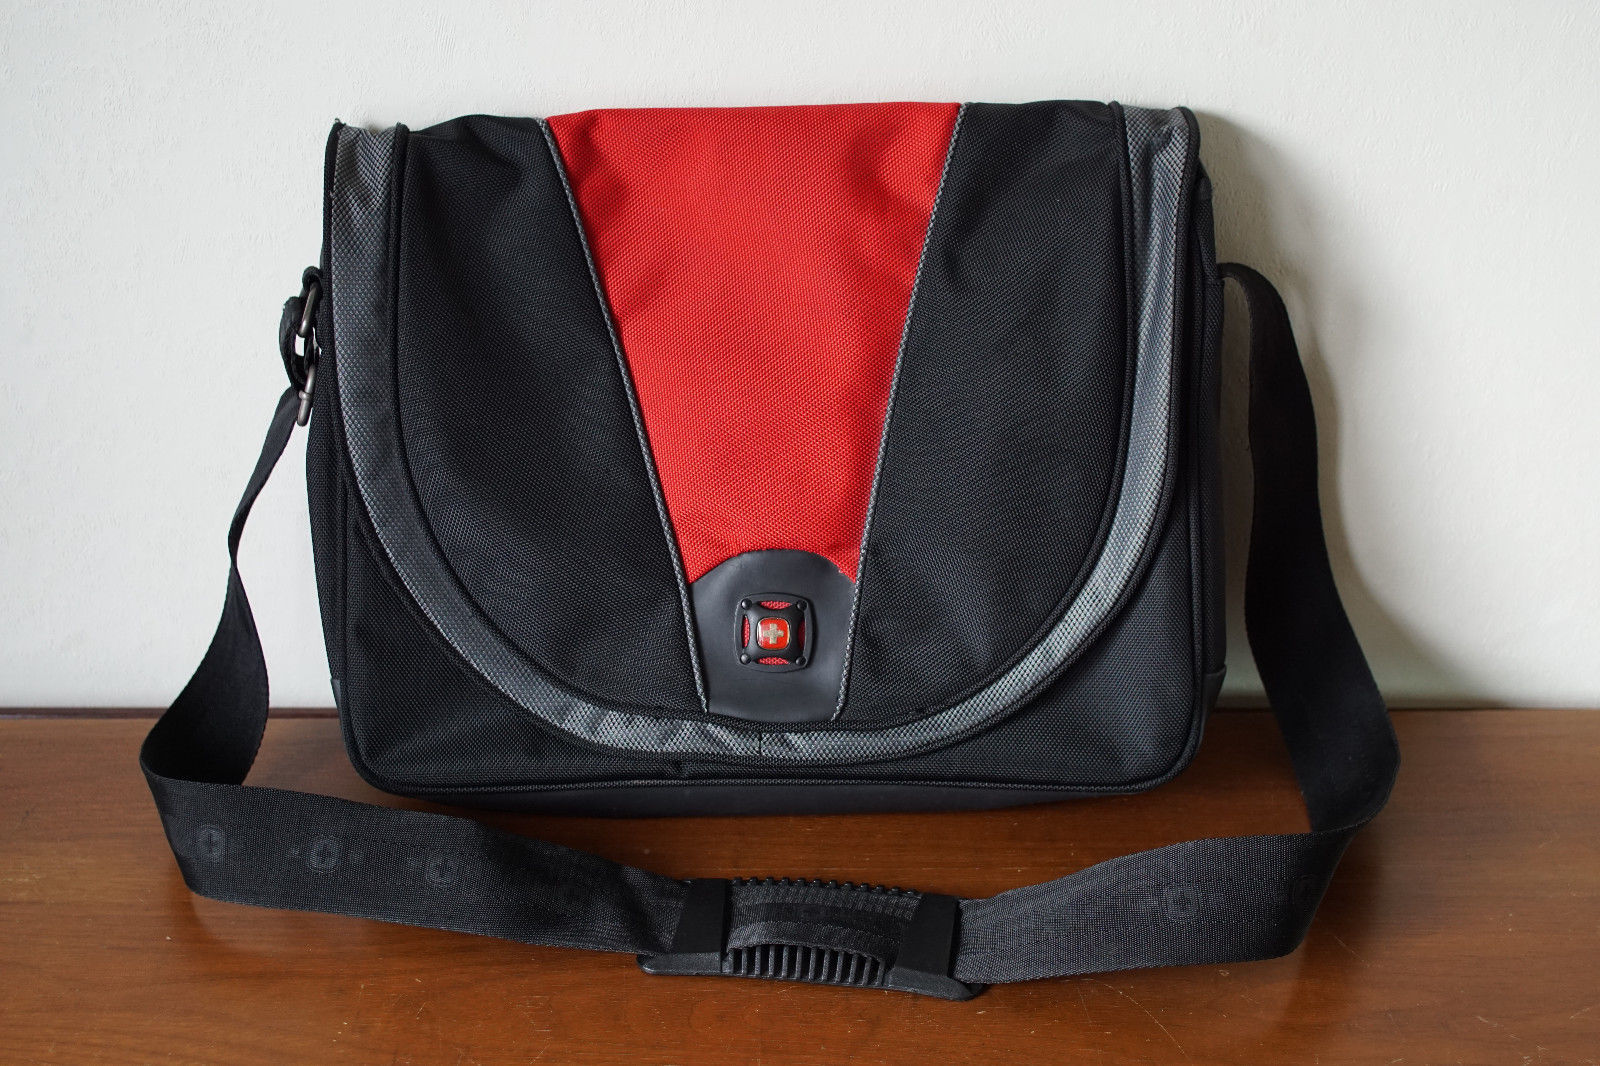 SwissGear Wenger Laptop Messenger Briefcase Bag Red / Black - $24.14